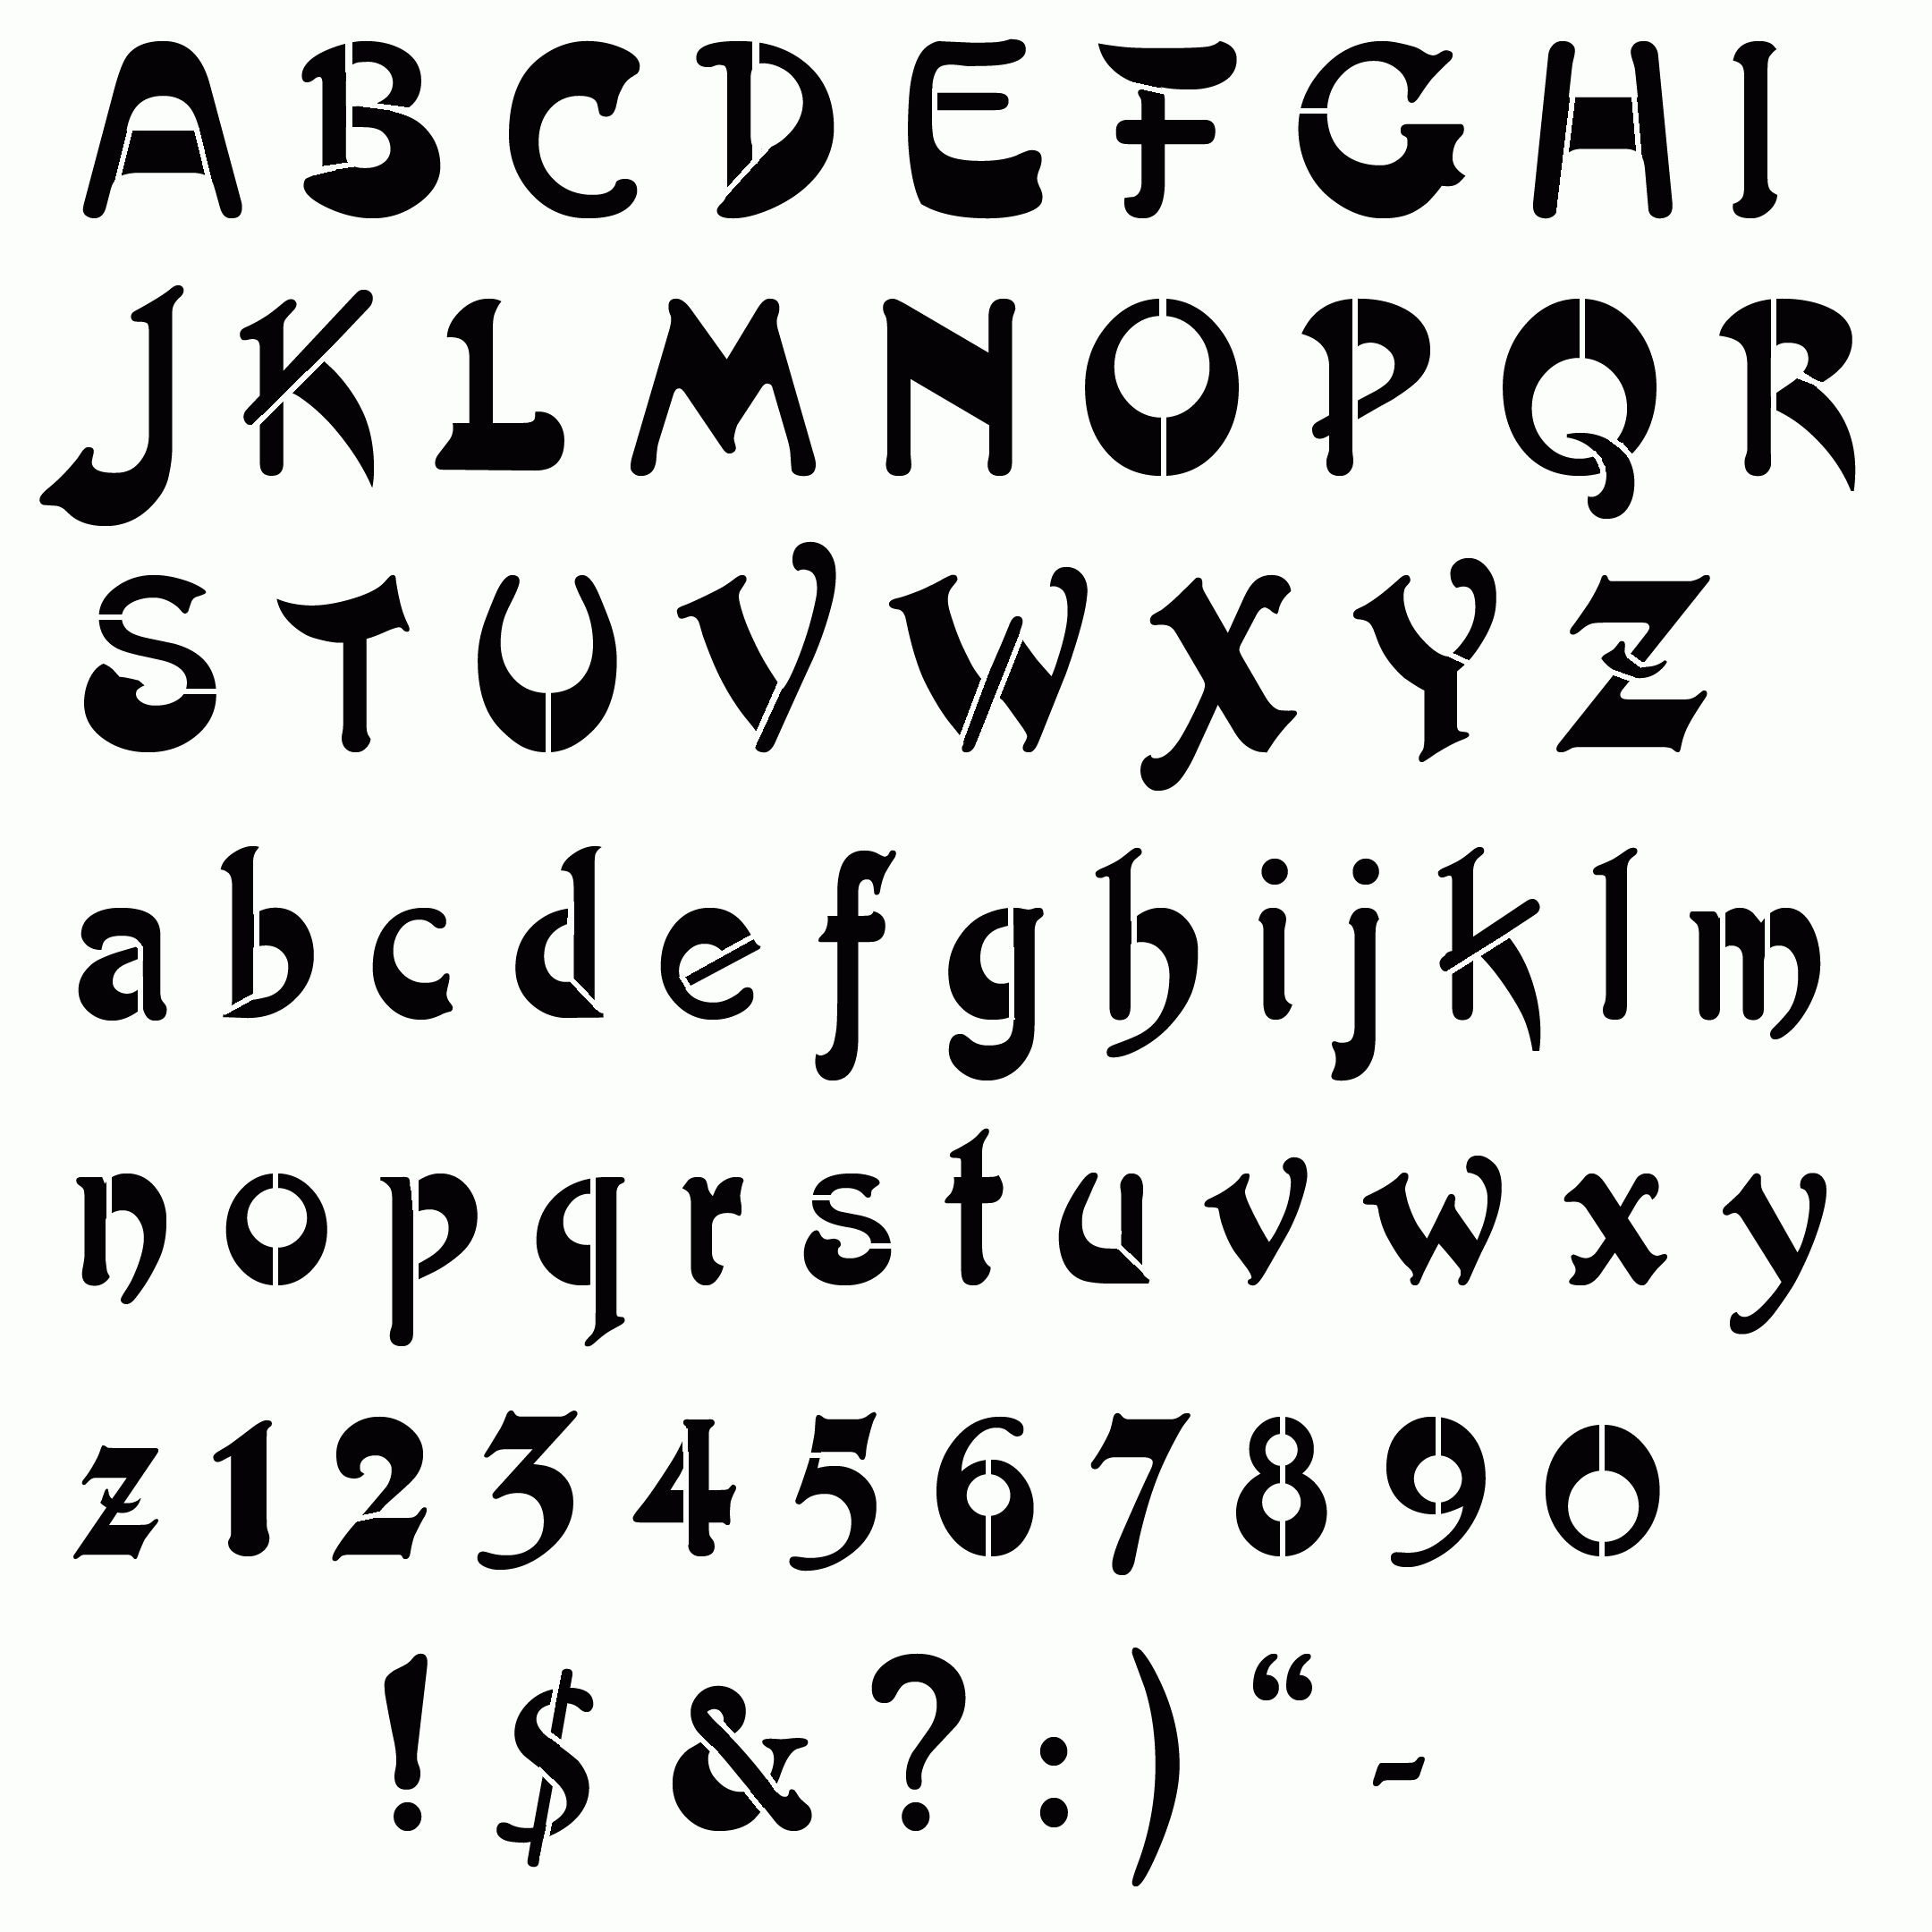 Free Cut Out Alphabet Stencils | View Image Design - View Stencil - Free Printable Alphabet Stencils To Cut Out